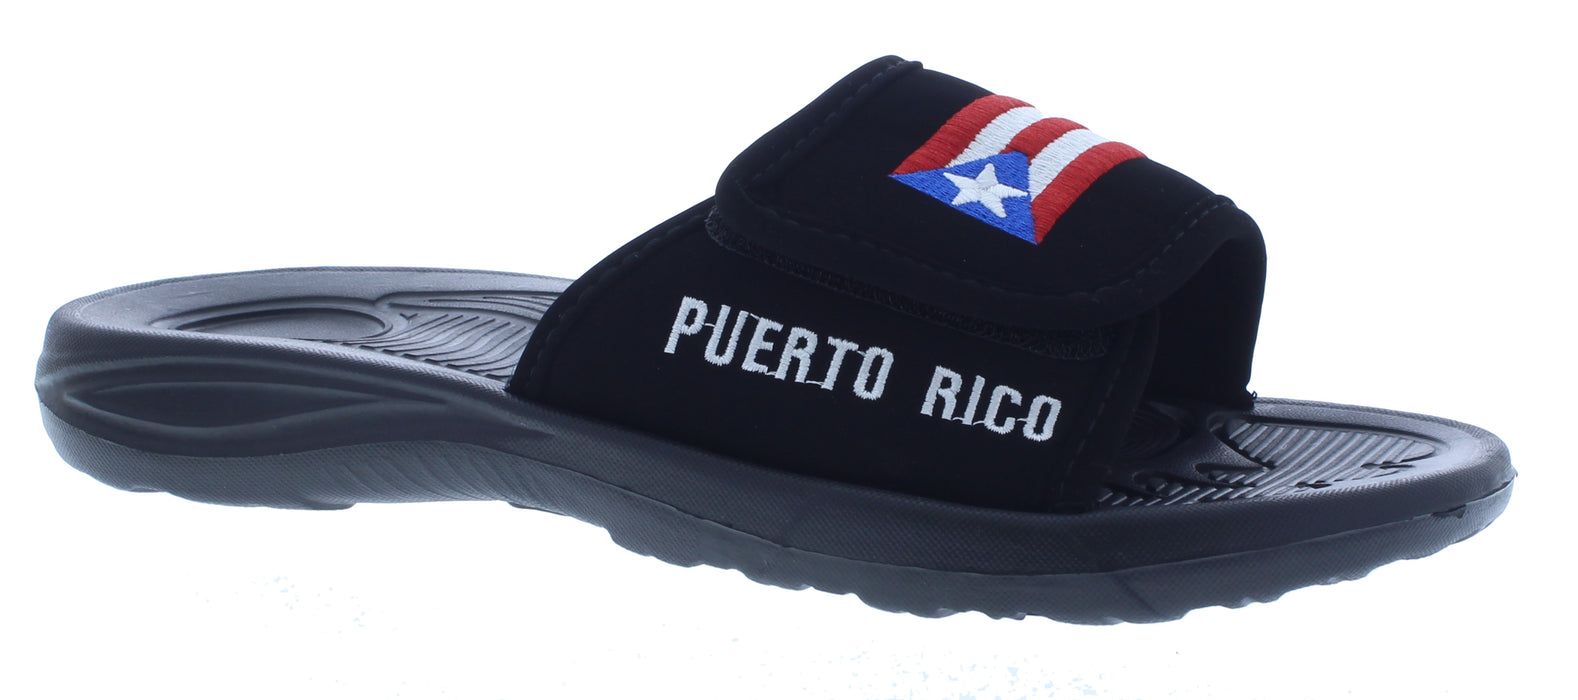 Men Fabric Slipper with Puerto Rico Print and Velcro Closure